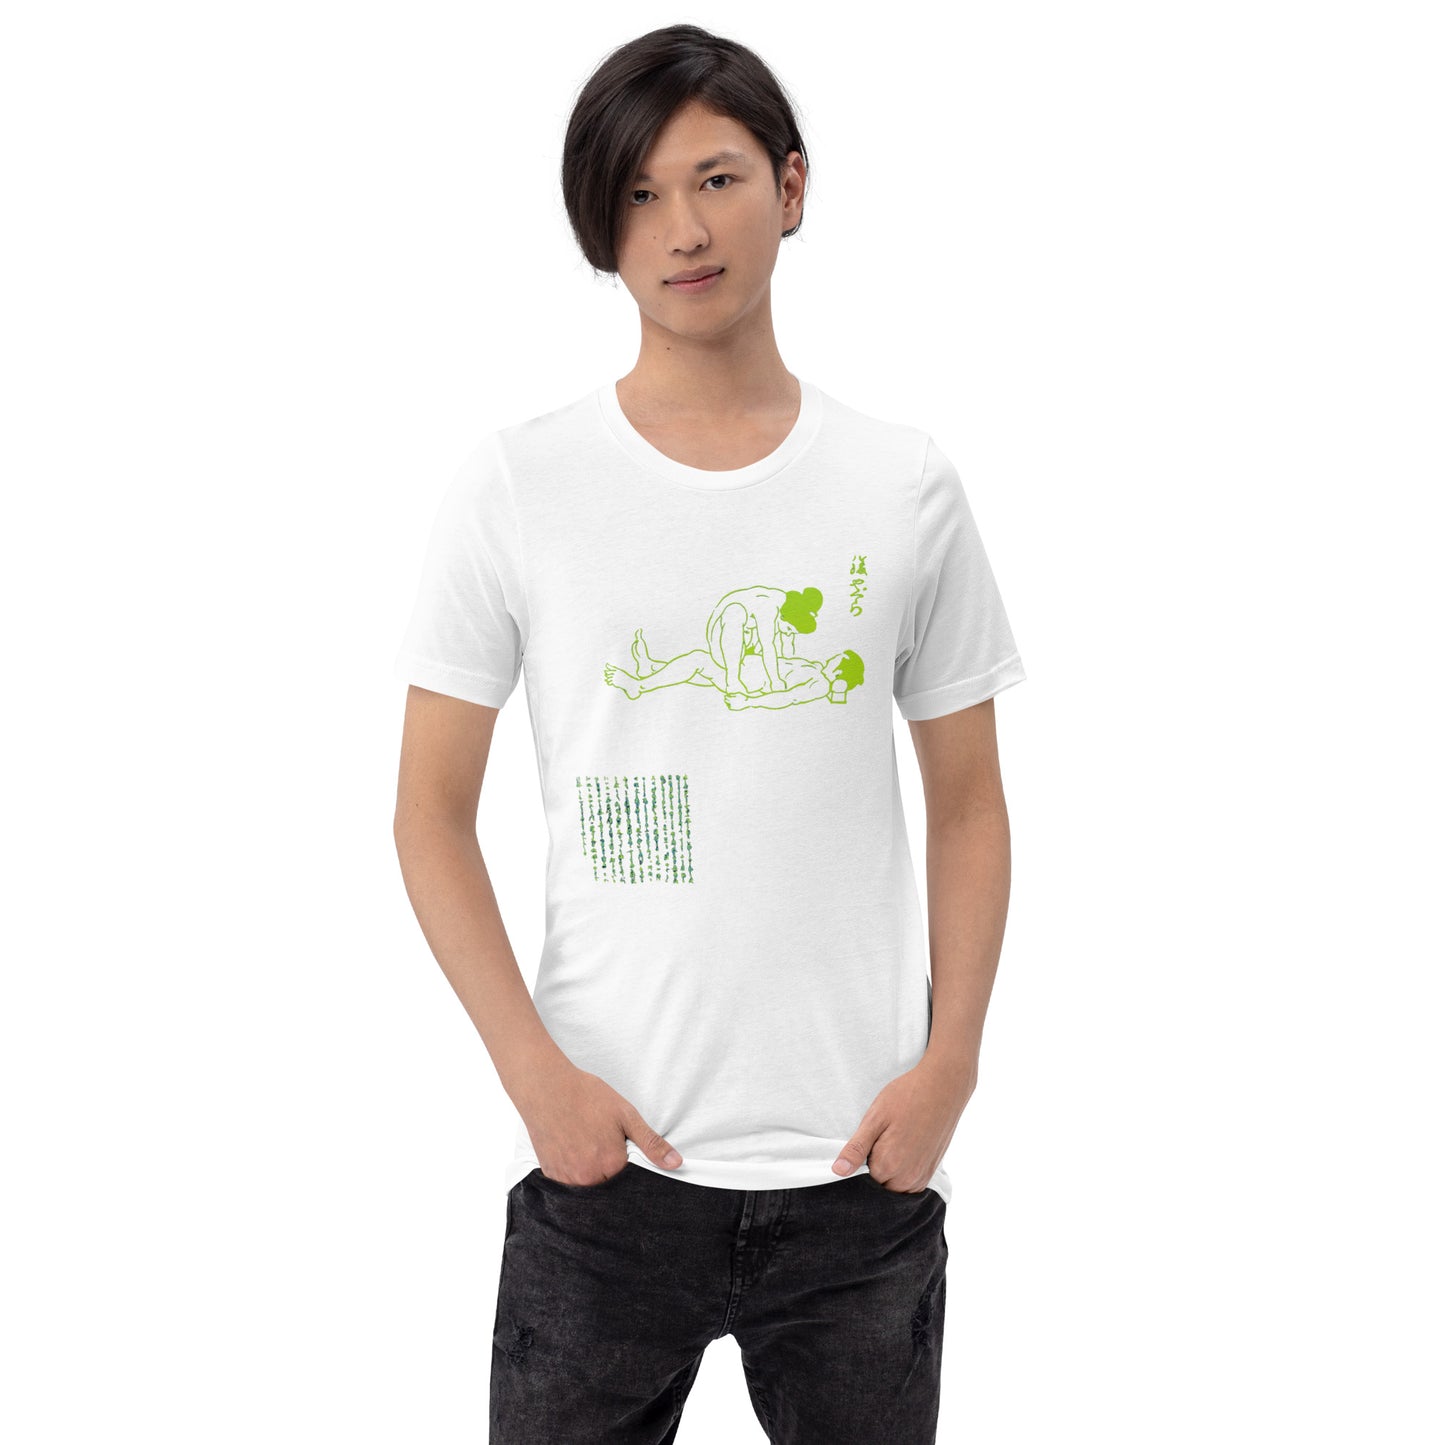 Unisex t-shirt "49 HARA YAGURA" White